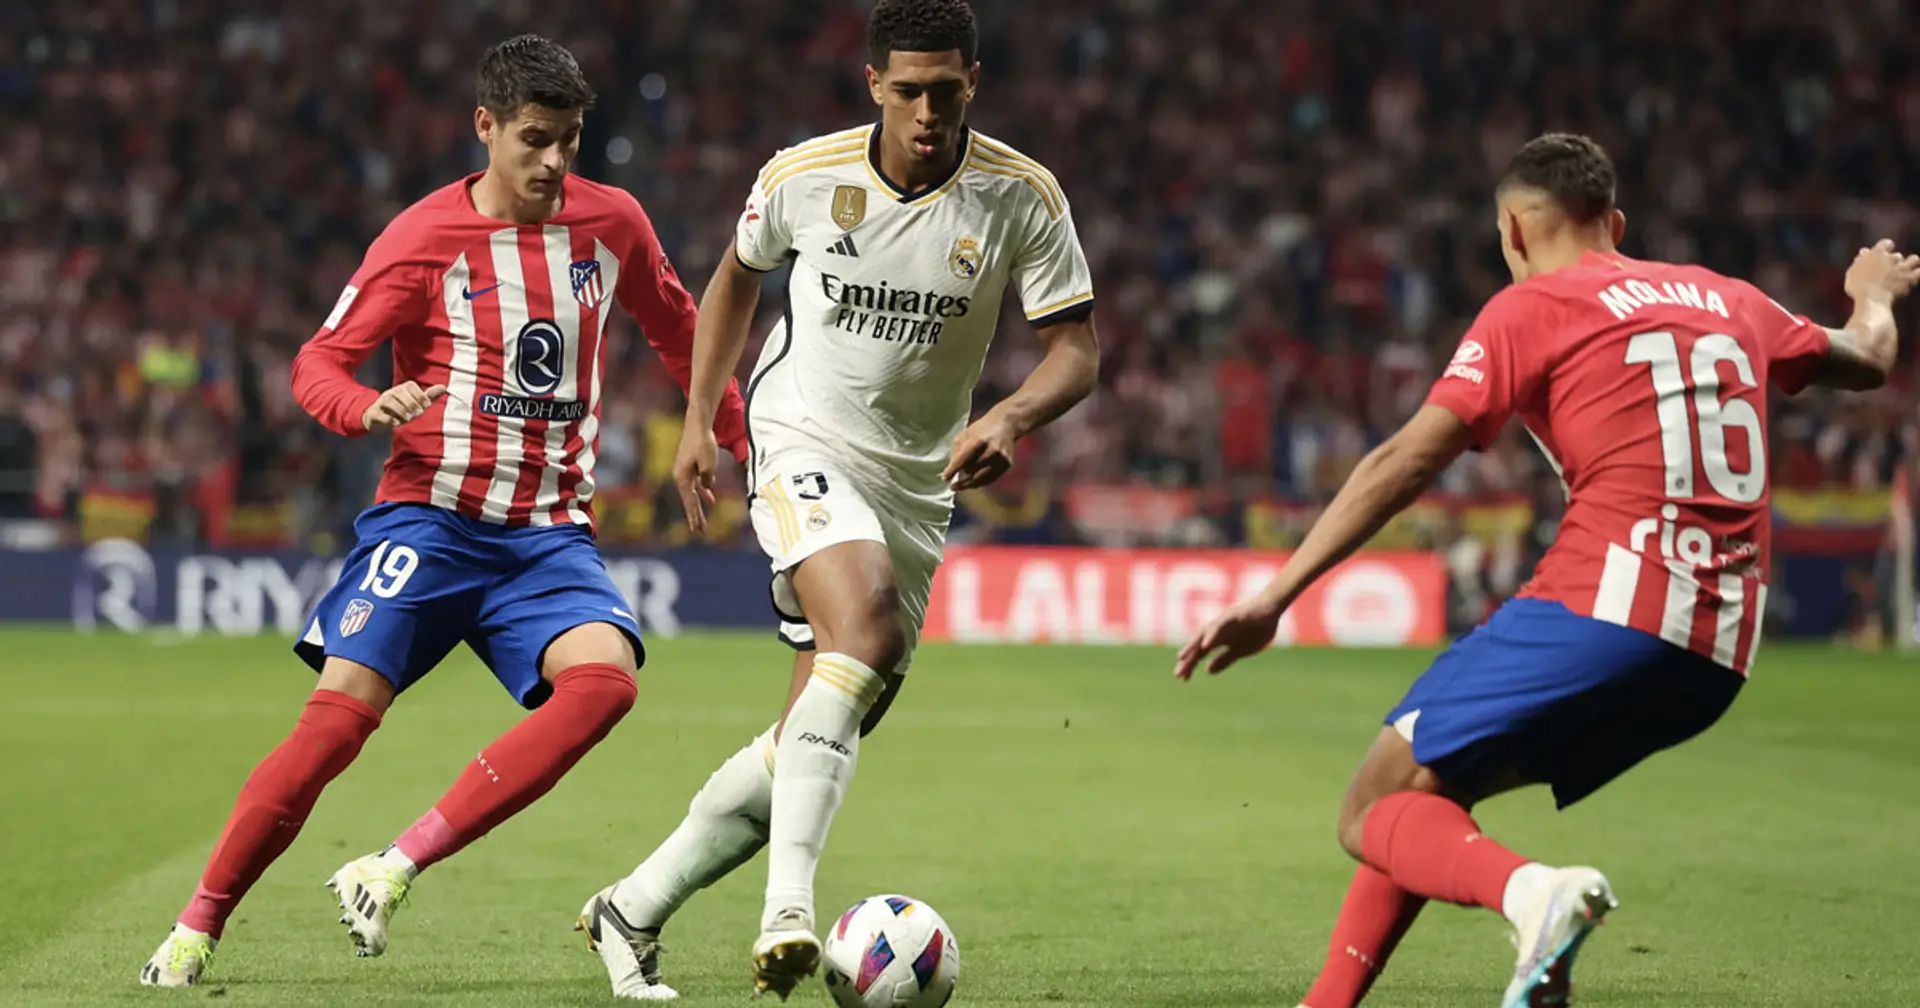 Real Madrid vs Atlético Madrid : pronostics et cotes de paris